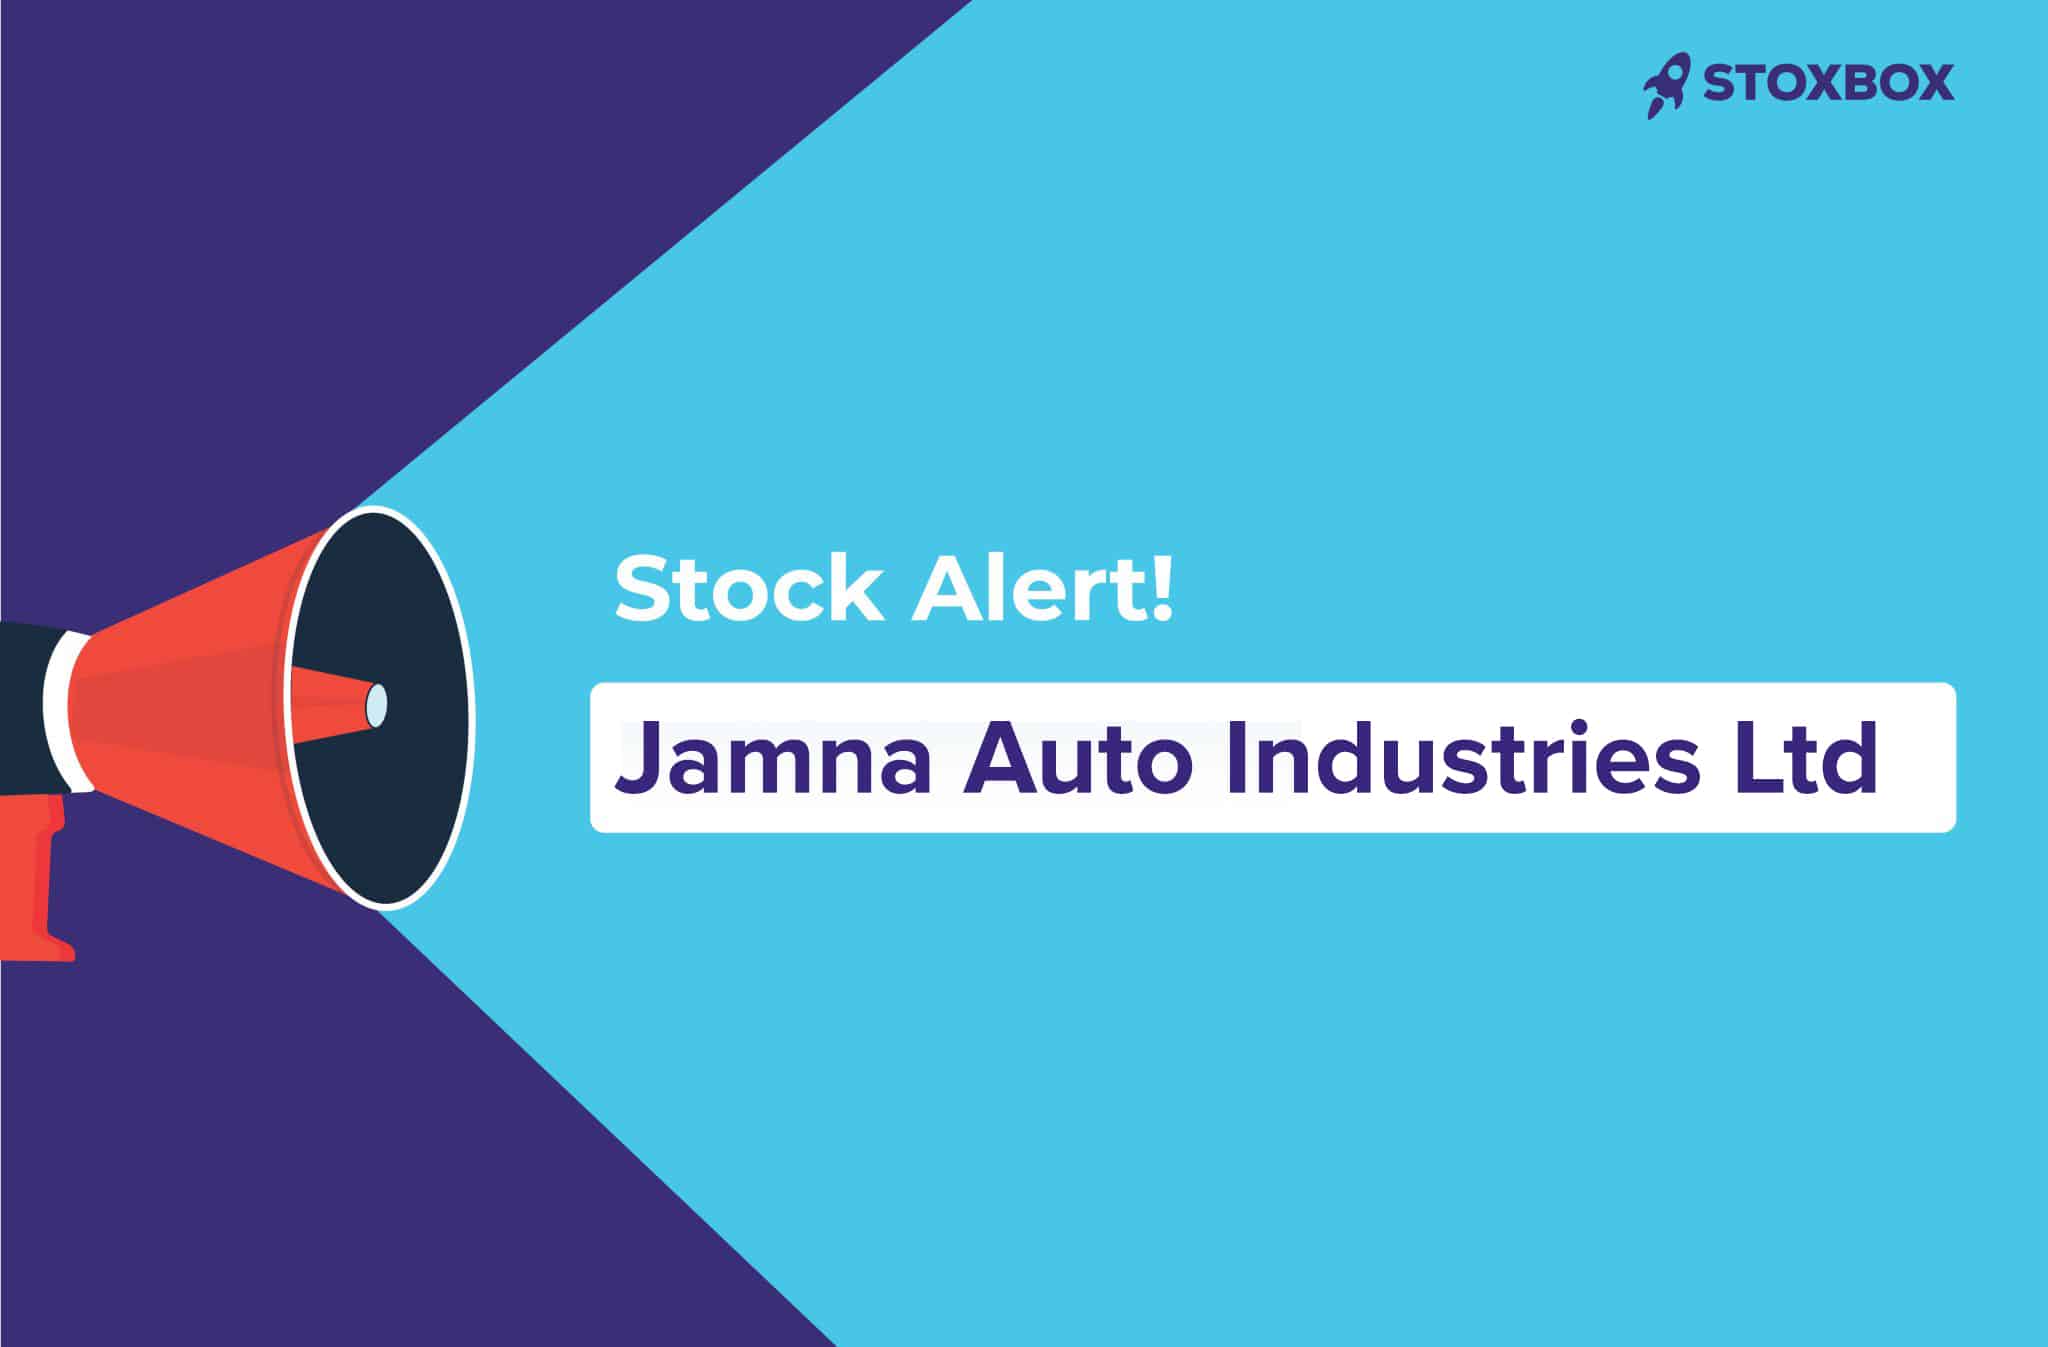 Jamna Auto Industries Ltd - BUY